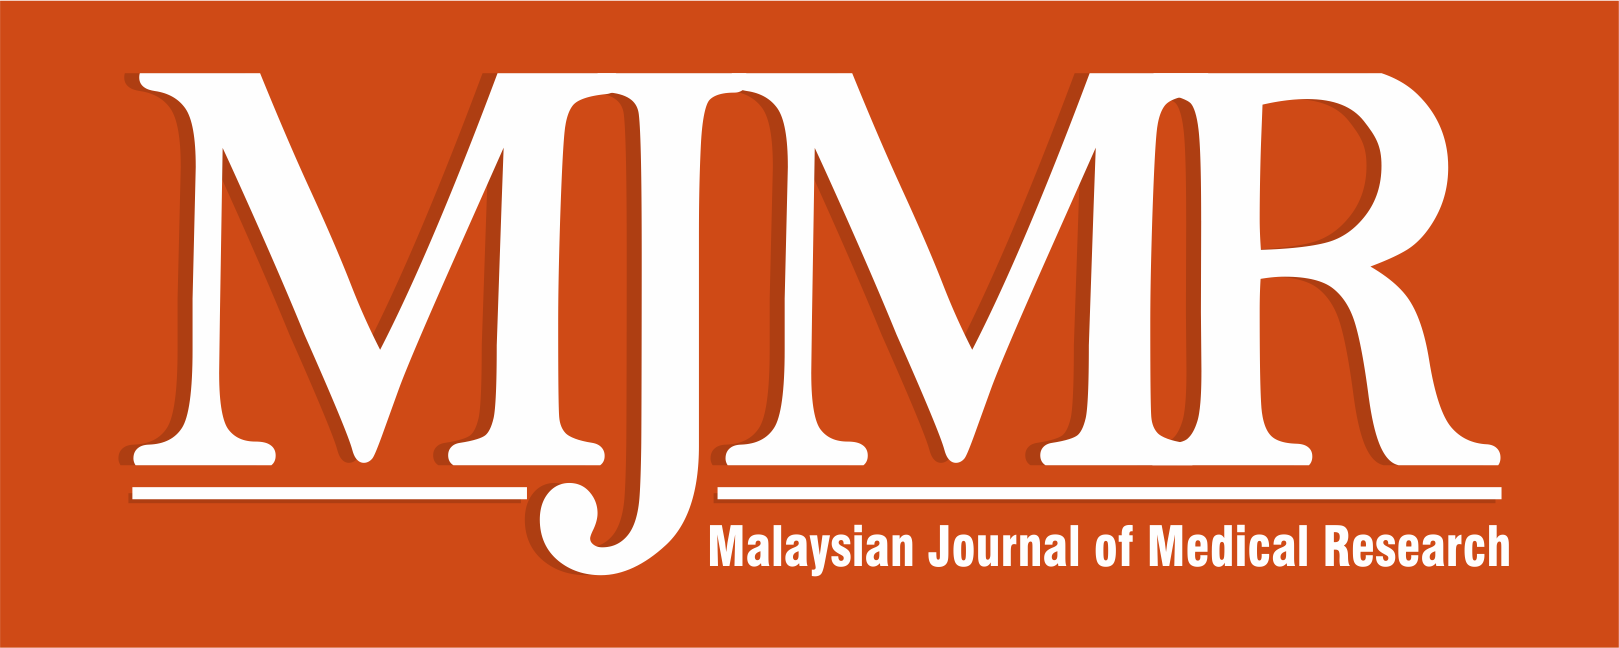 MJMR logo